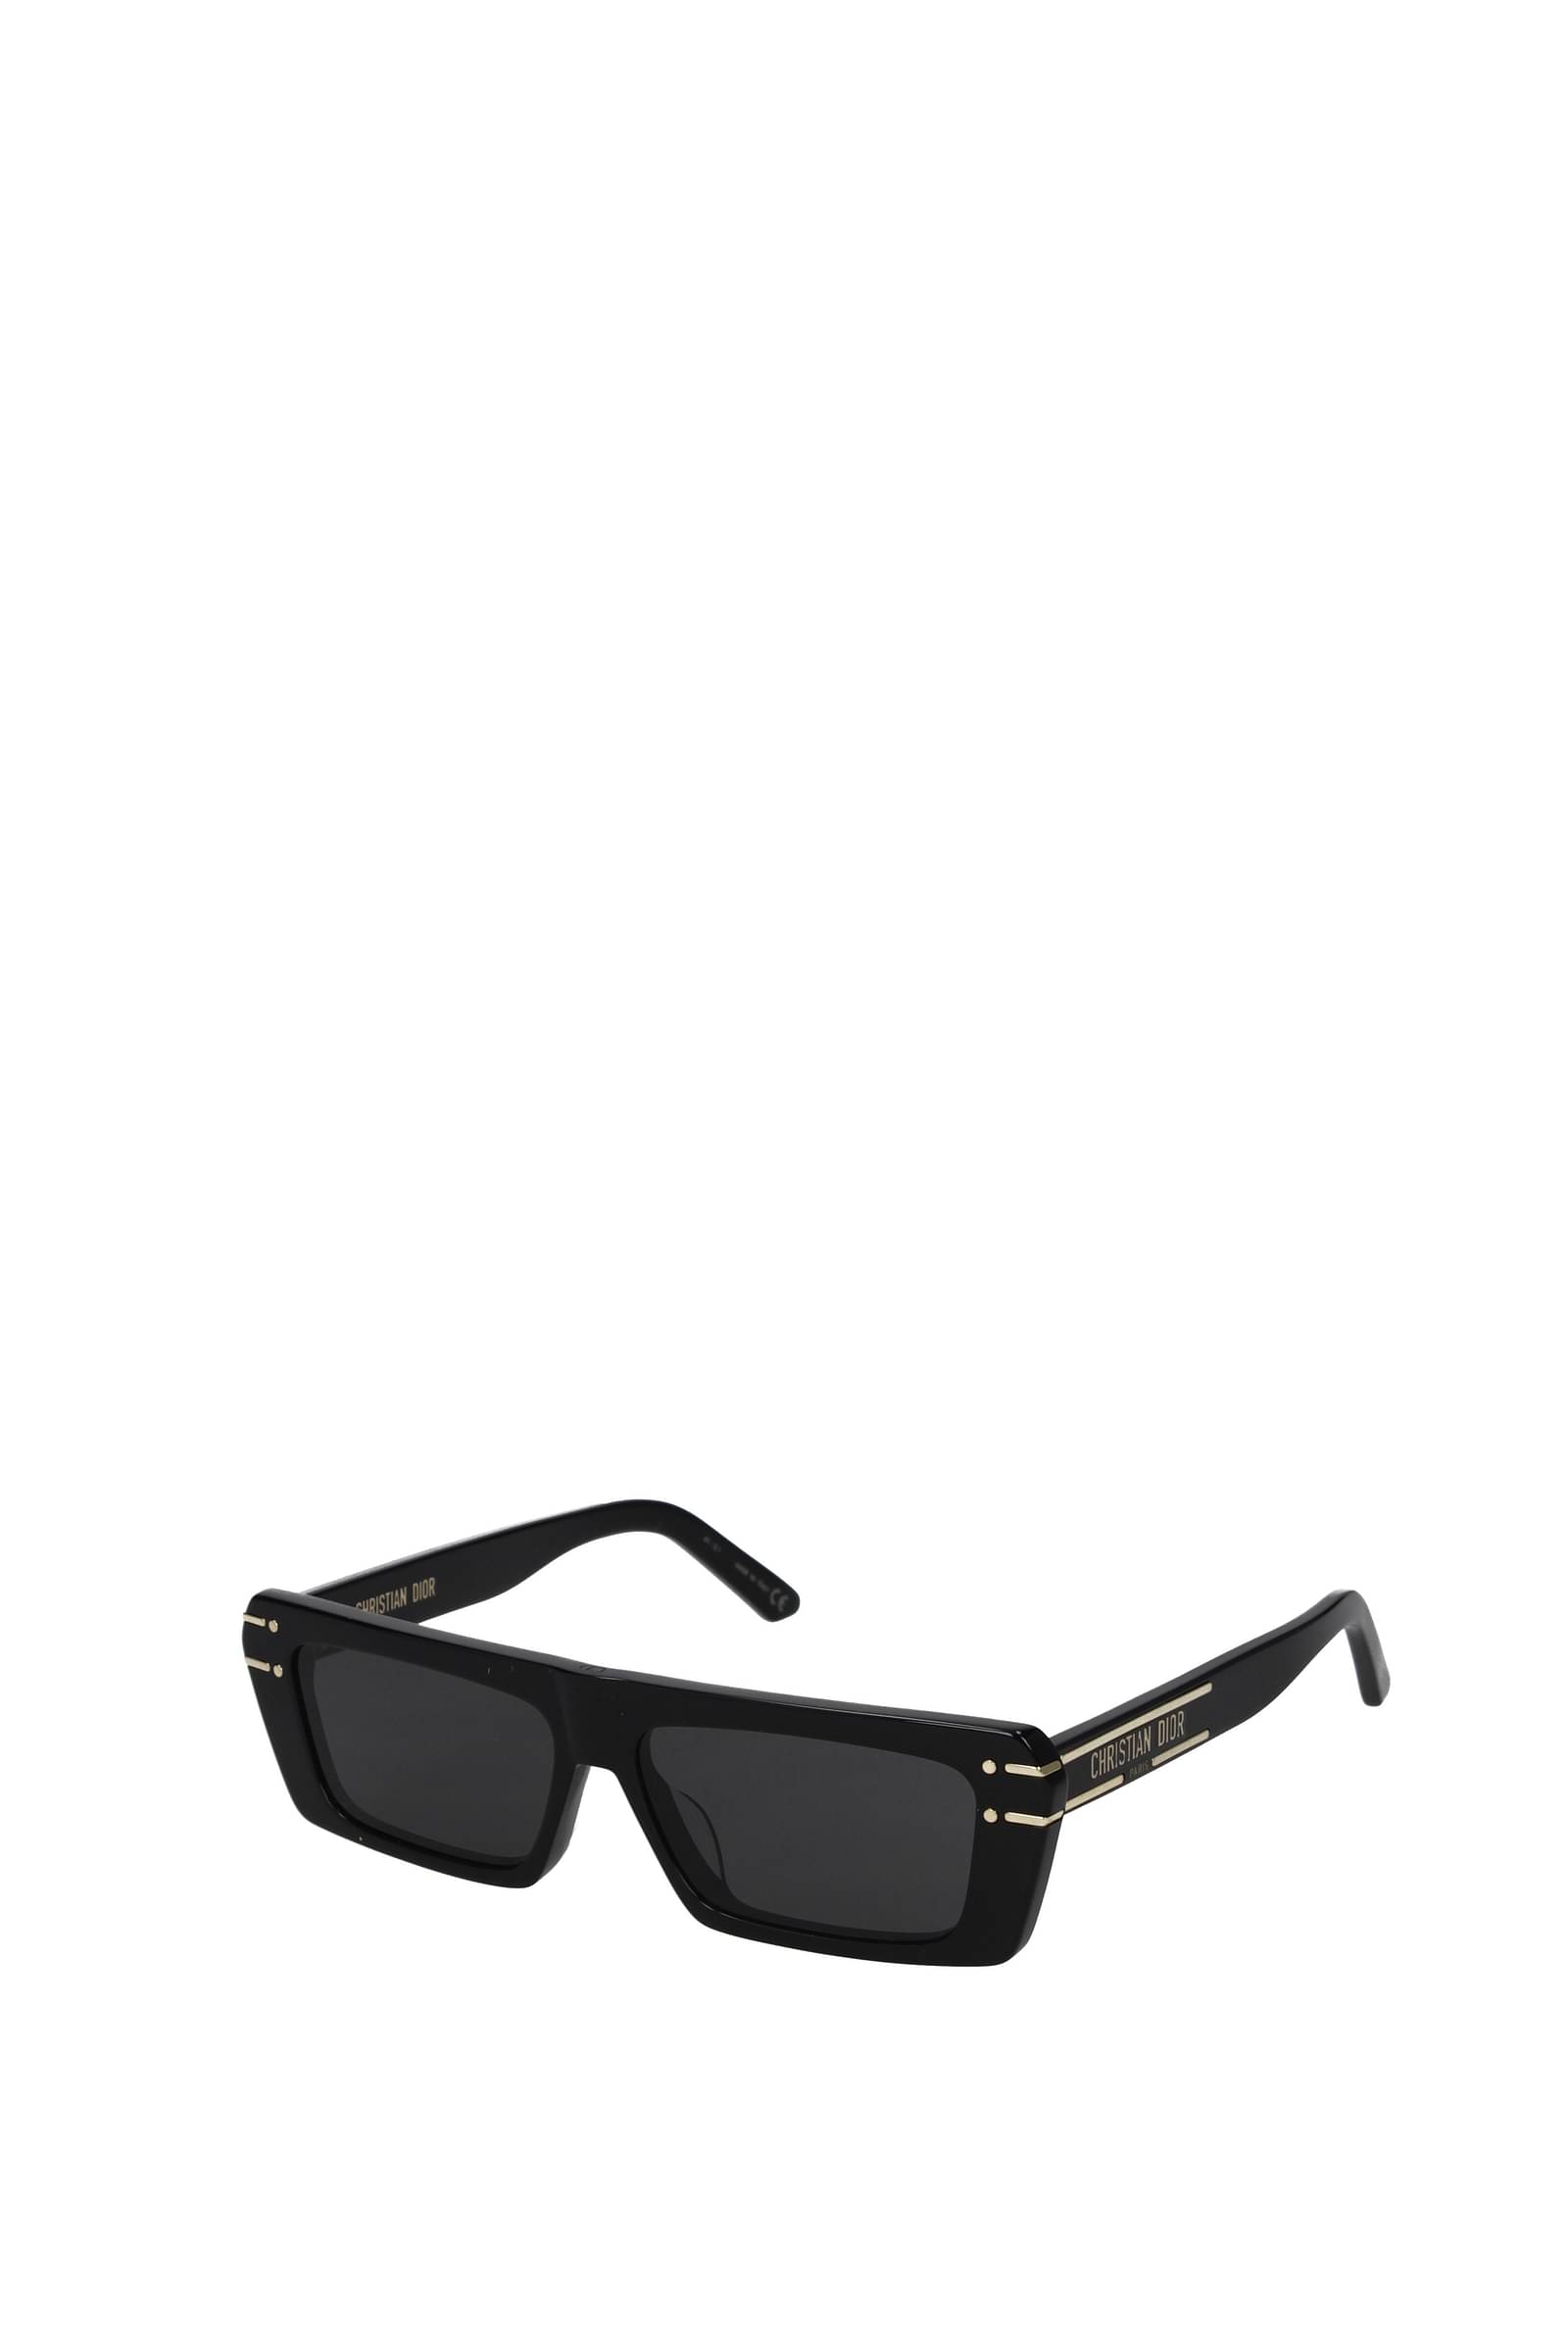 Discountkennetcheapestlist: Best offer Christian Dior Sunglasses ONDINE  BLACK/GRAY GRADIENT 807HD